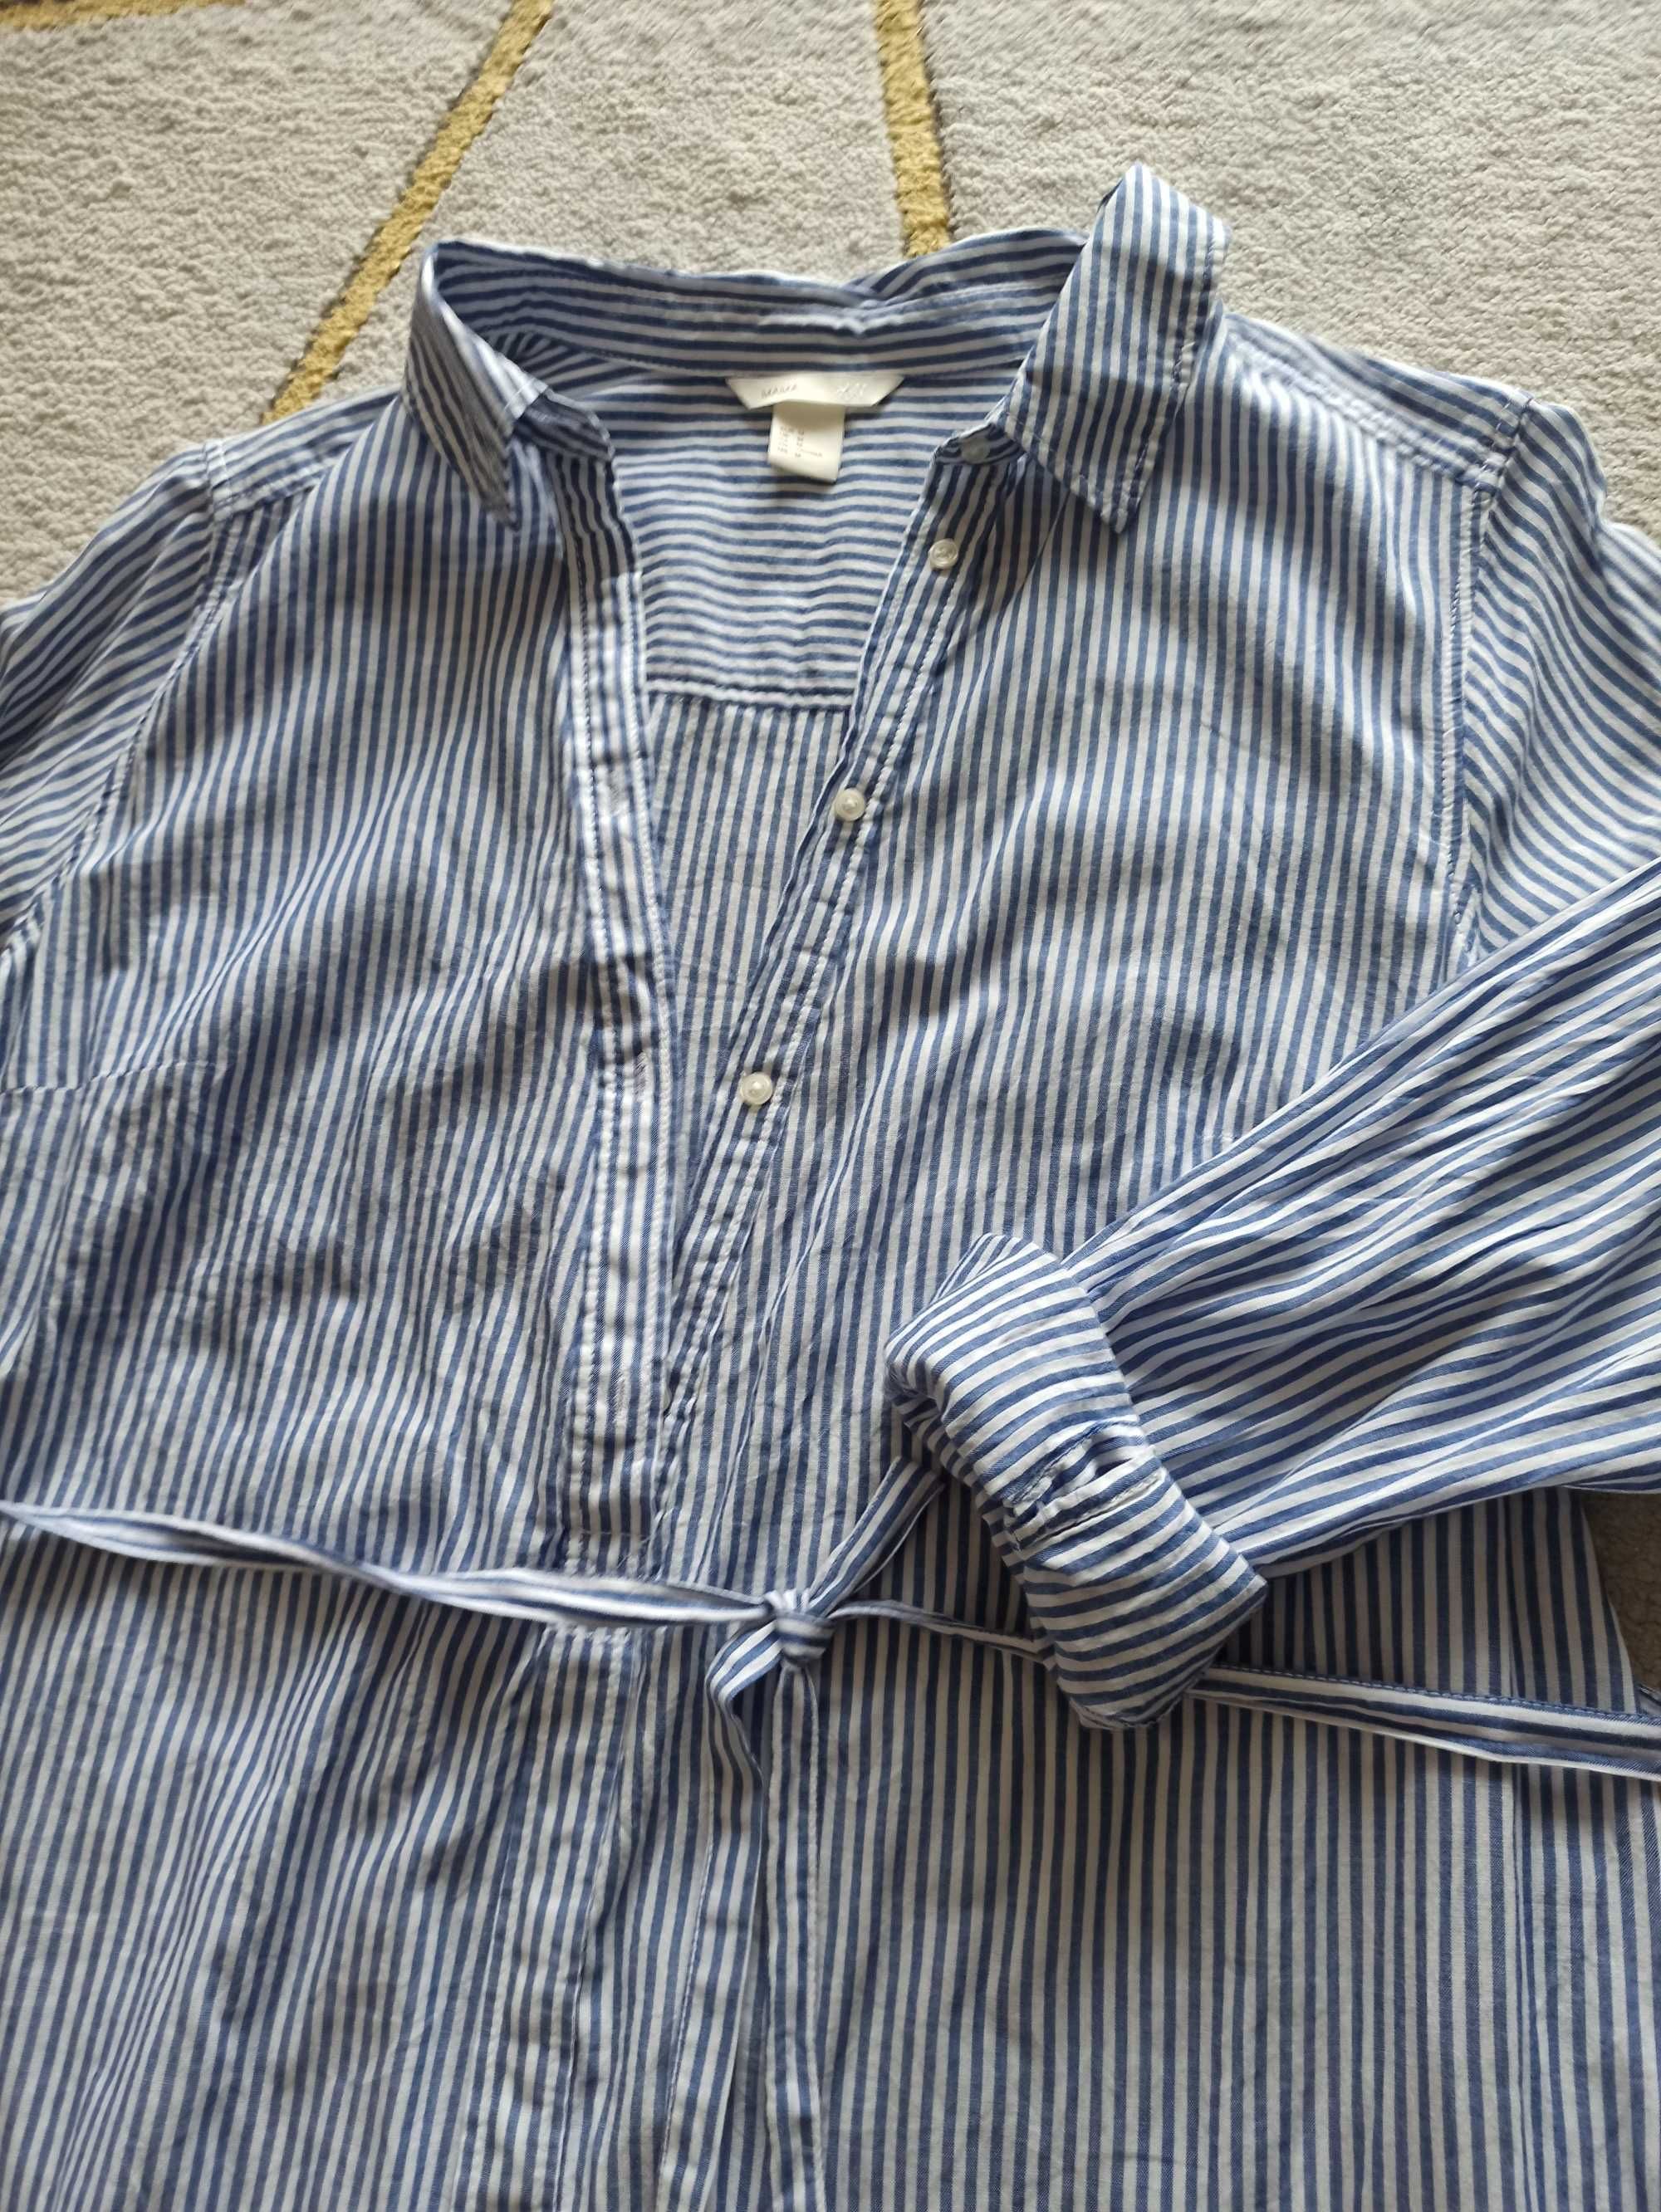 Koszula / bluzka / tunika ciążowa M